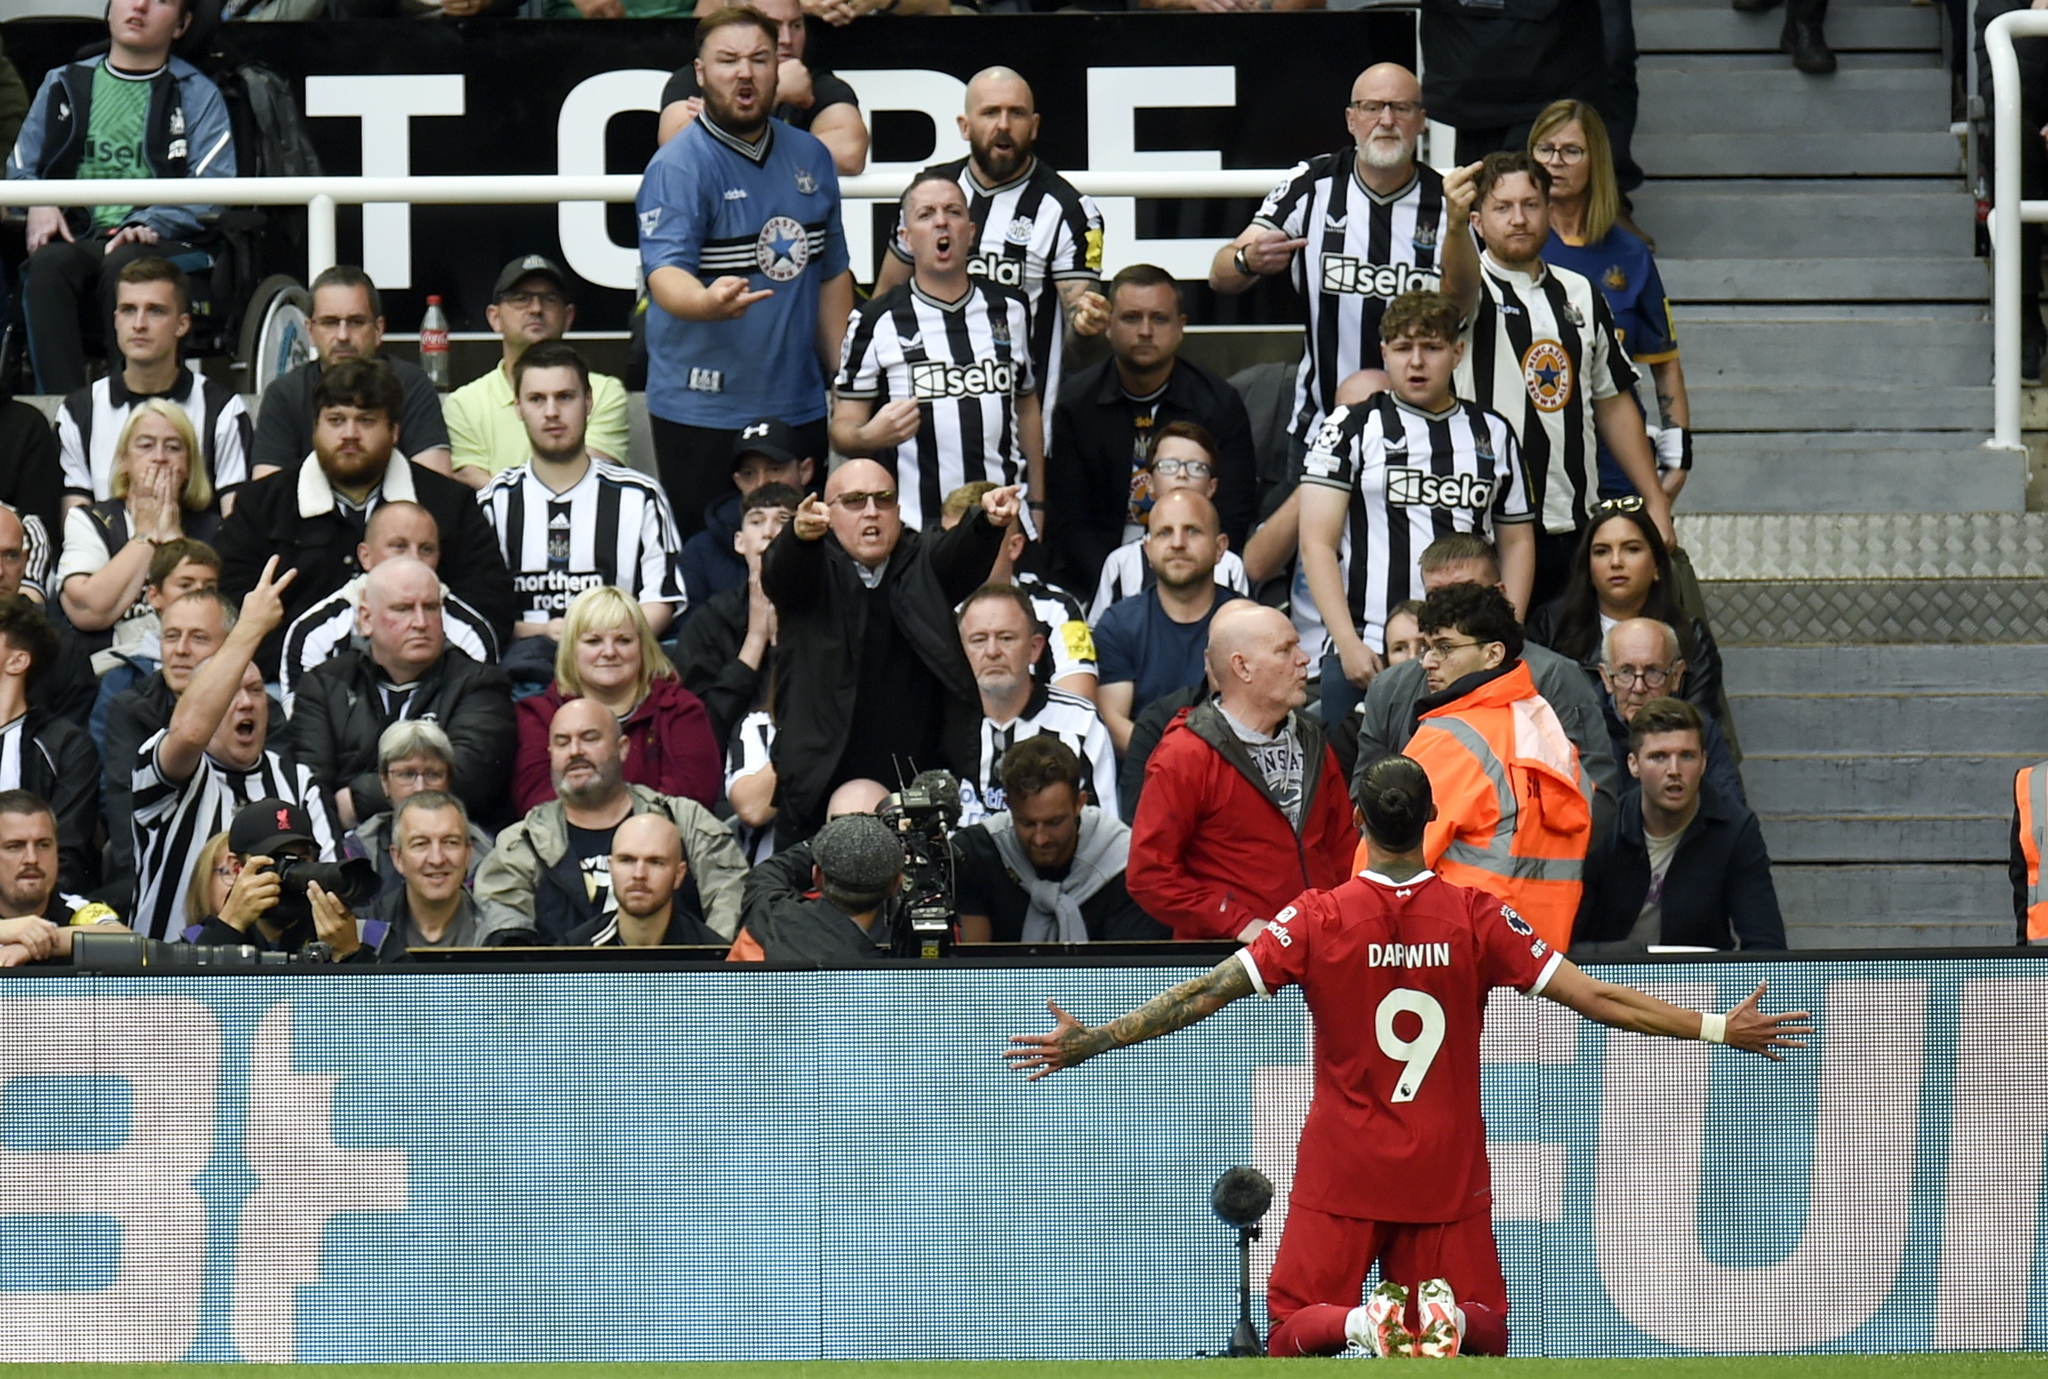 Darwin Nunez of Liverpool celebrates scoring the winning goal against Newcastle